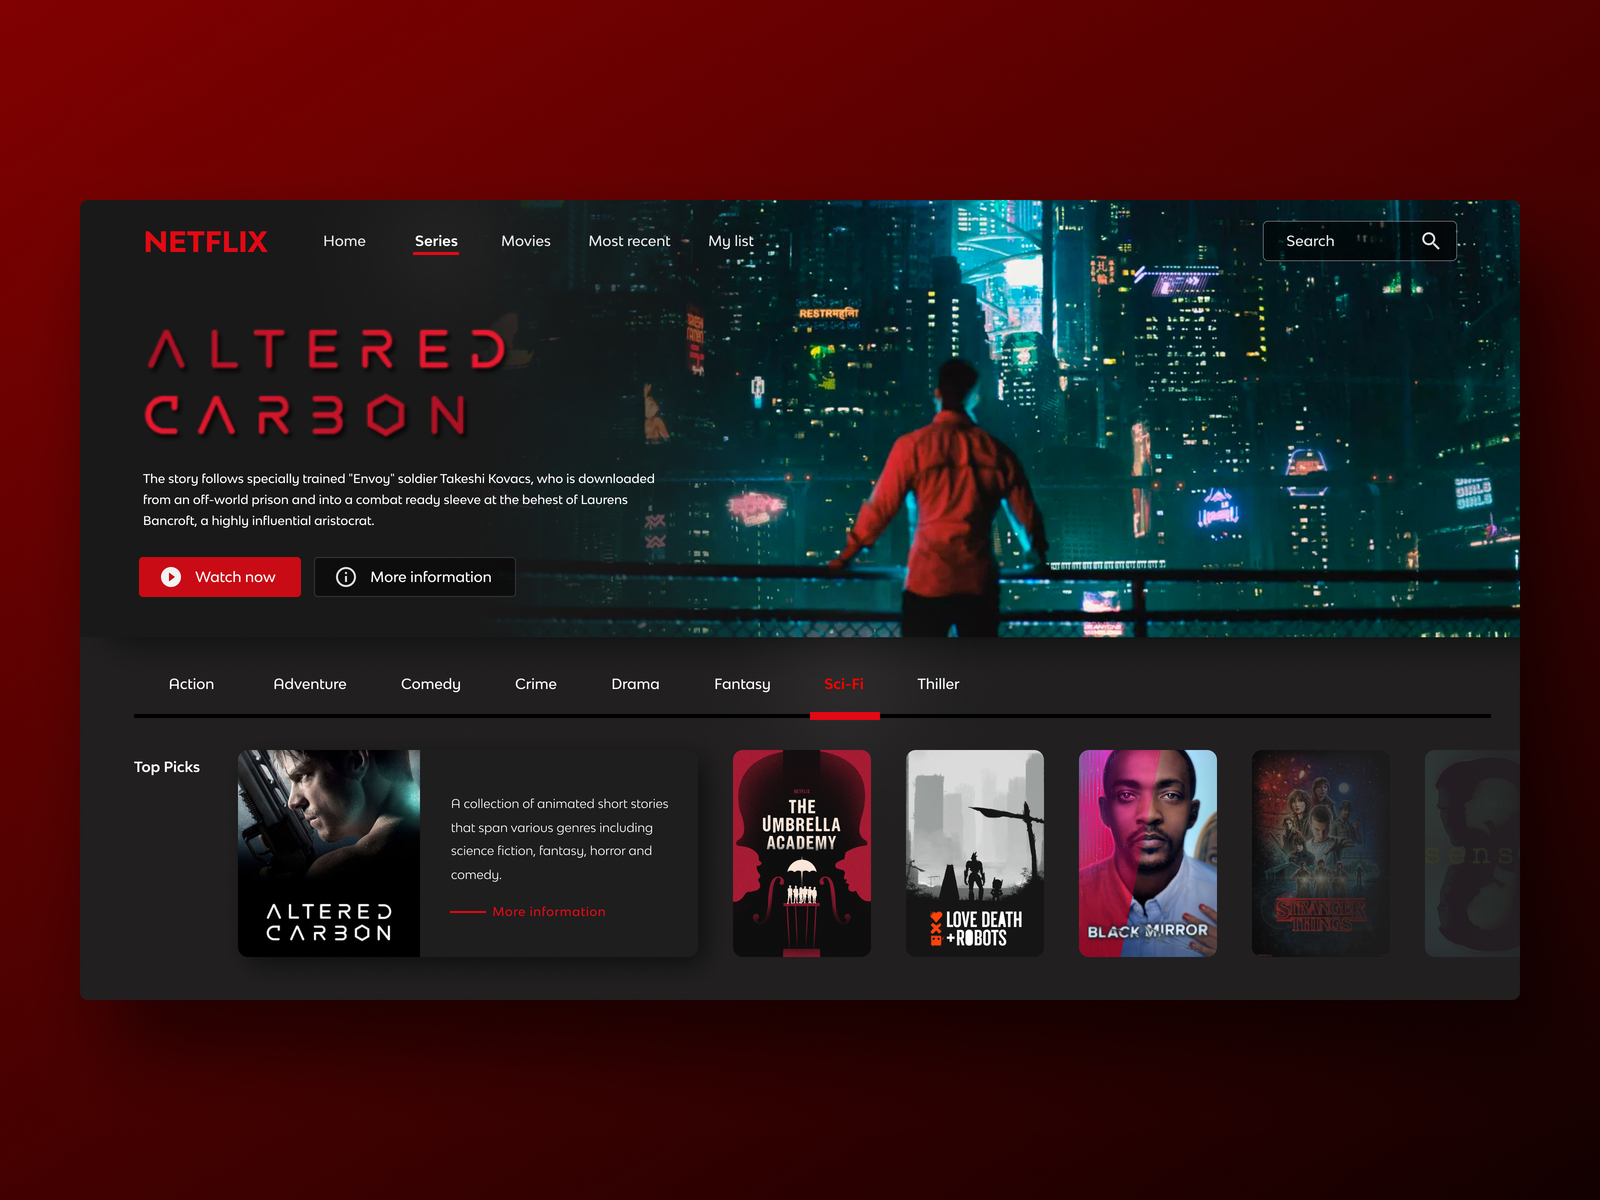 Netflix redesign concept by Venita Burger on Dribbble